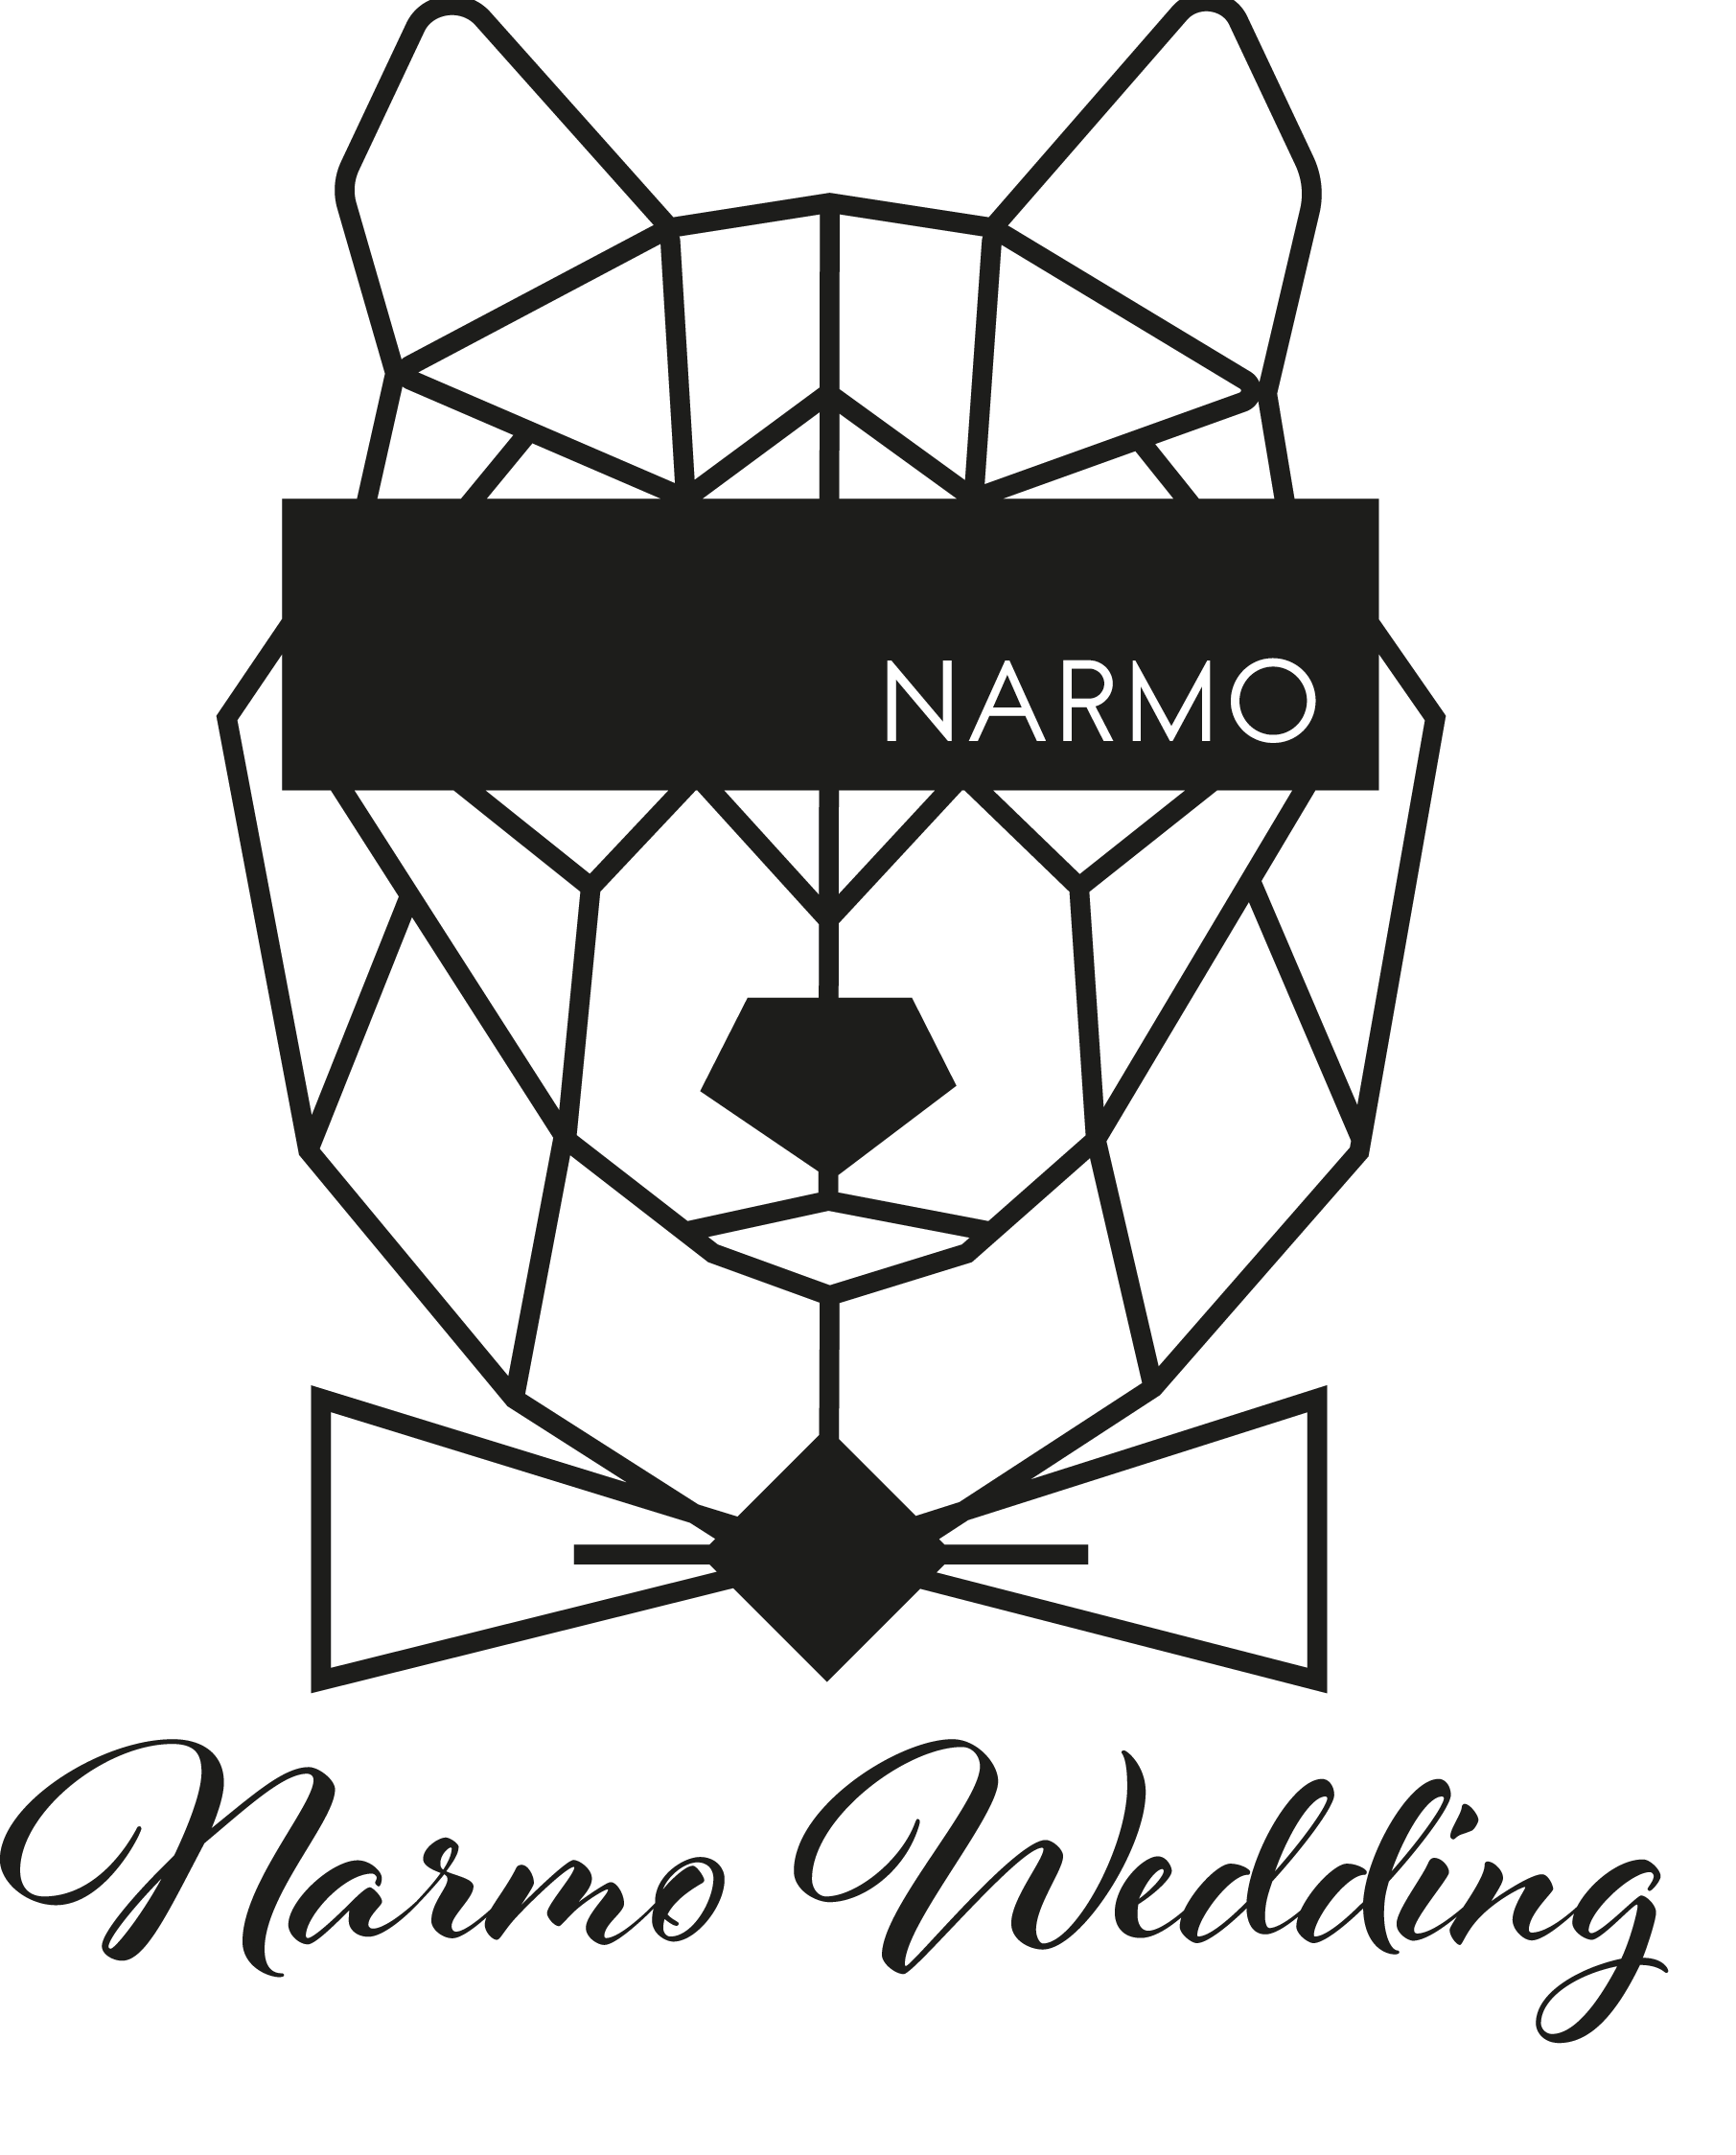 Narmo Wedding